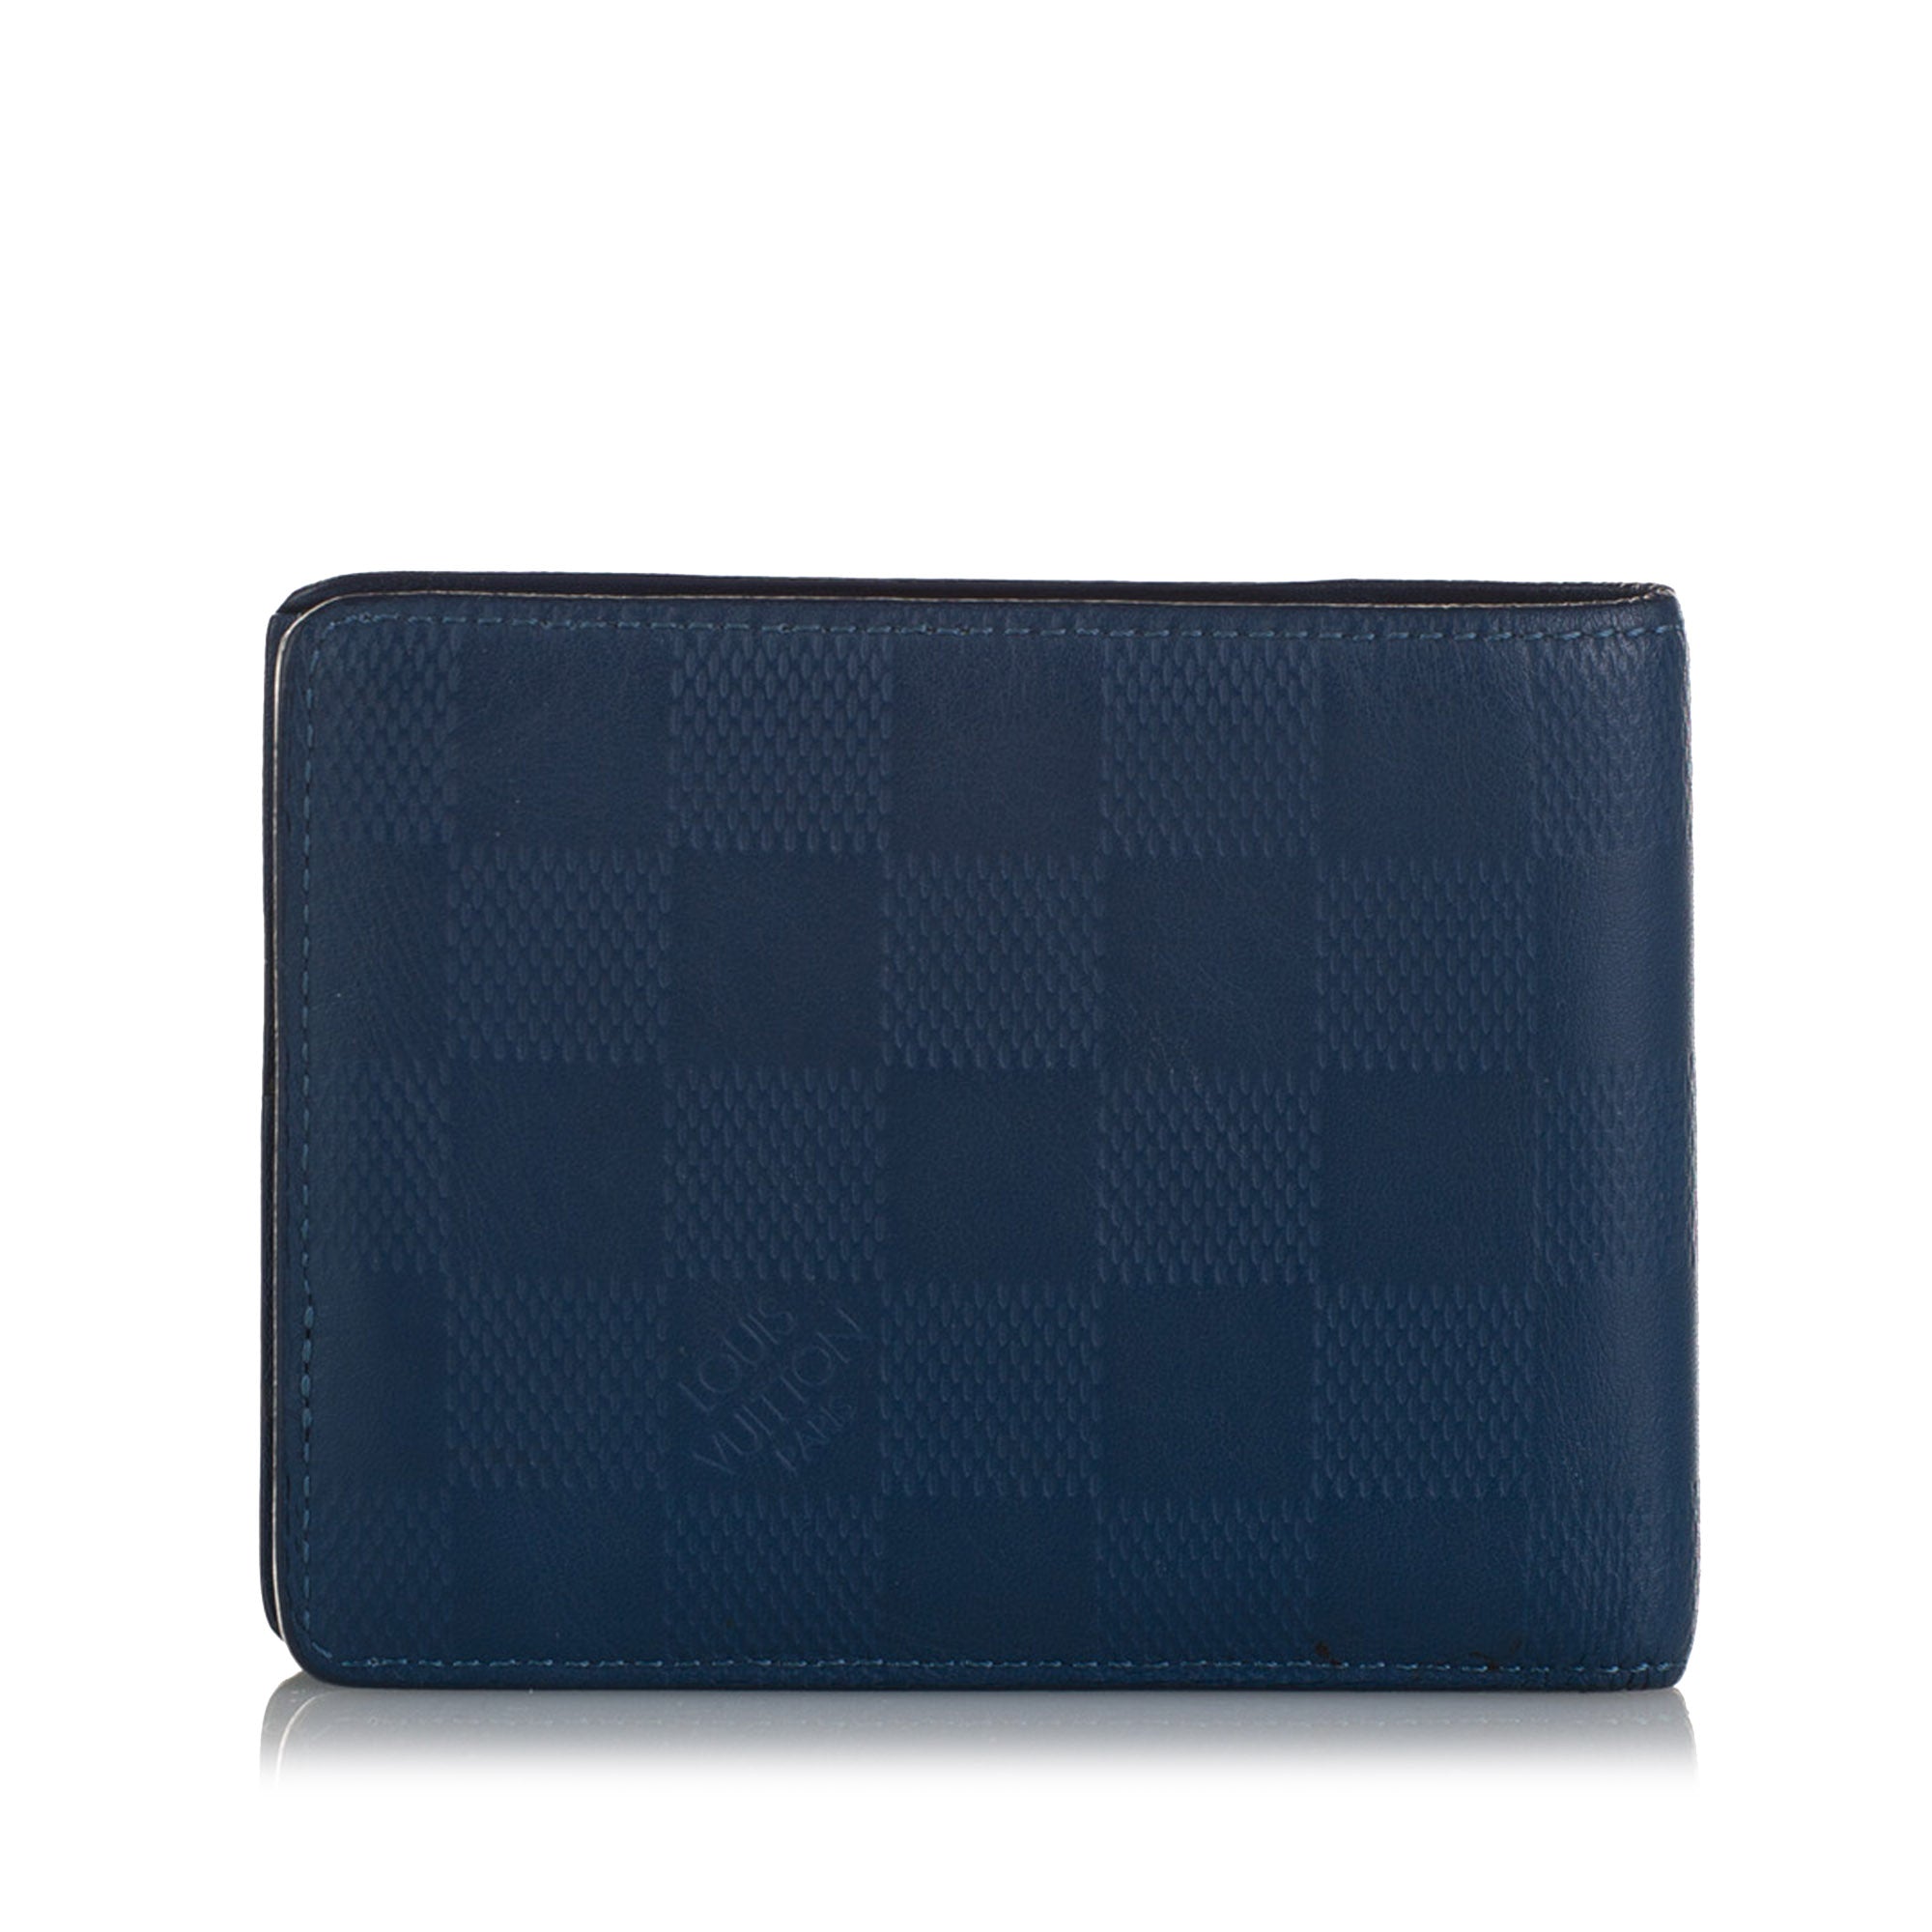 Black Louis Vuitton Damier Infini Small Wallet